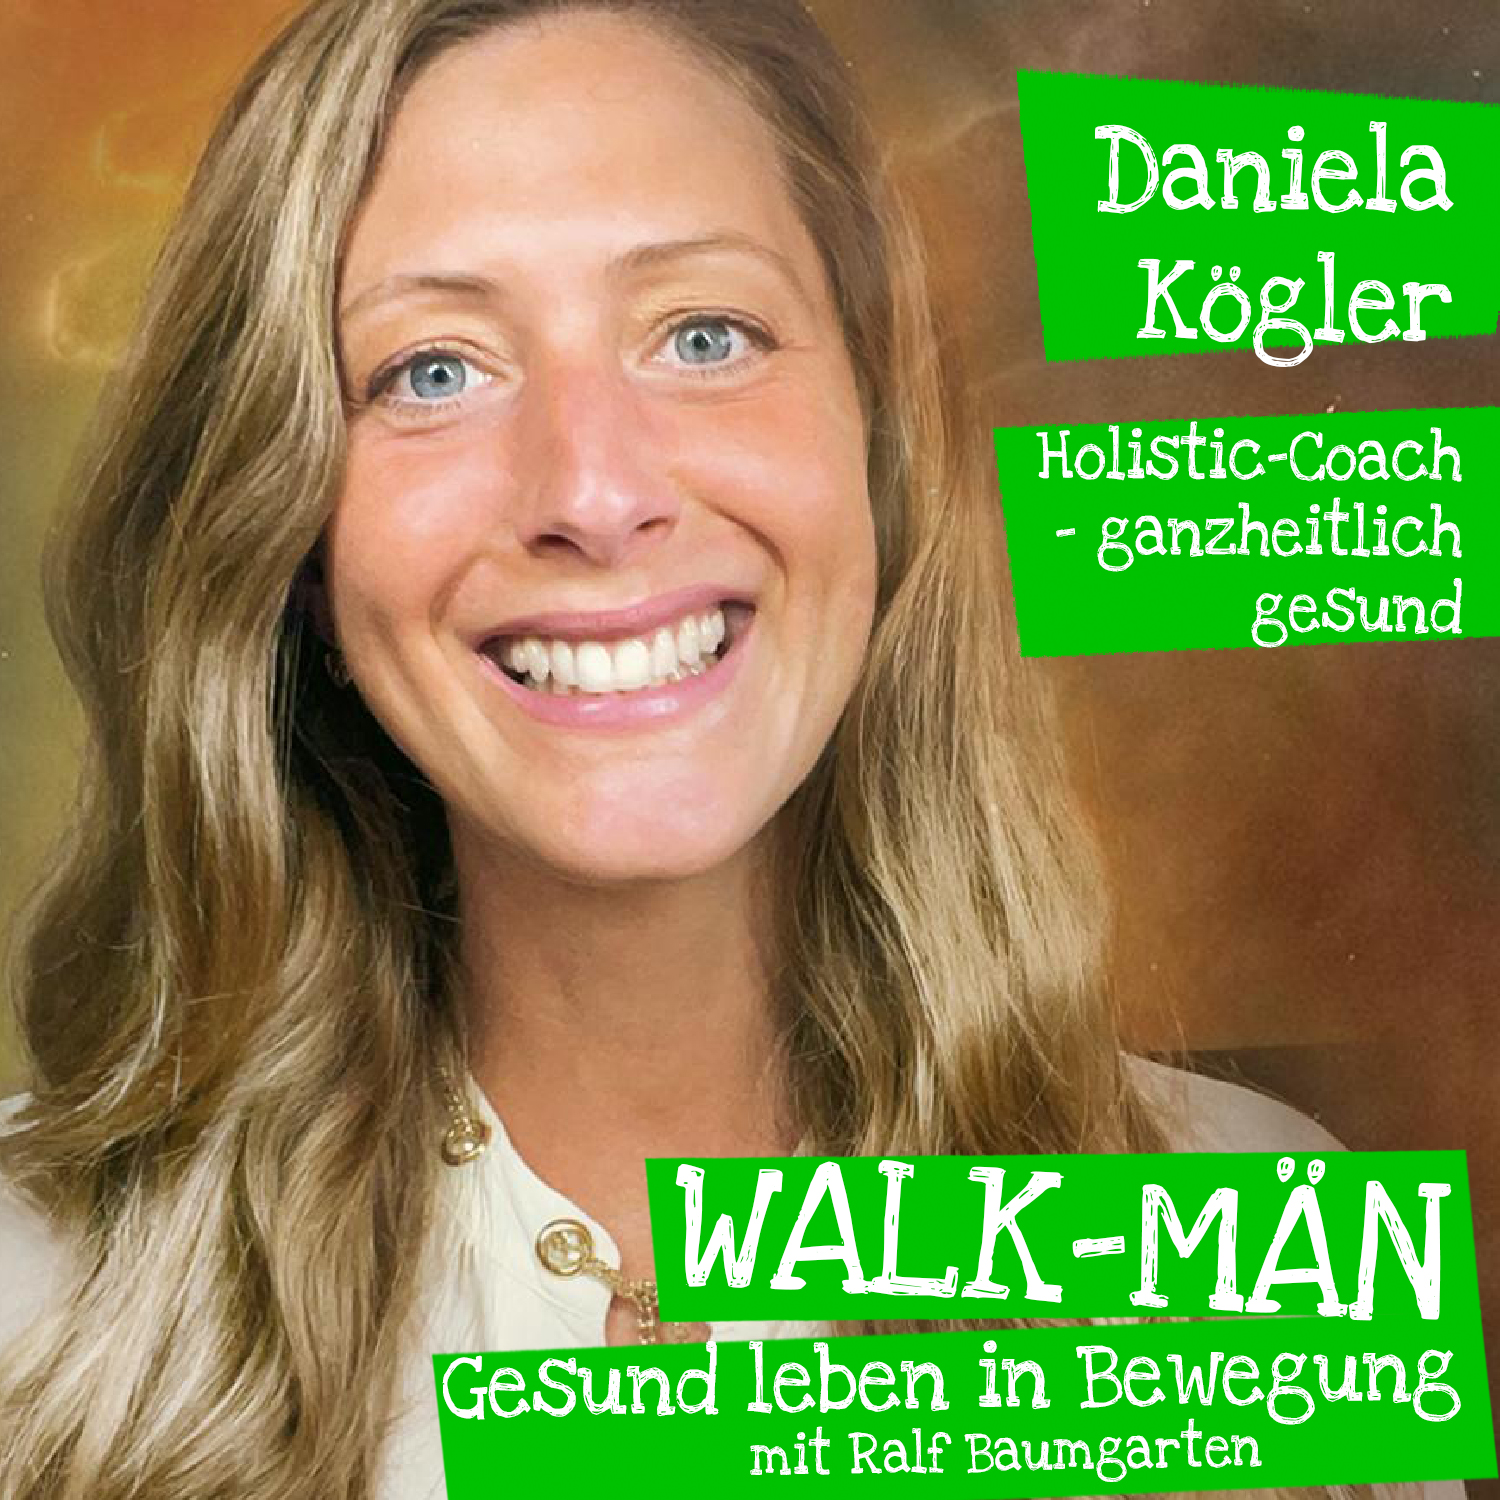 Daniela Kögler folgt dem Ruf ihrer Seele